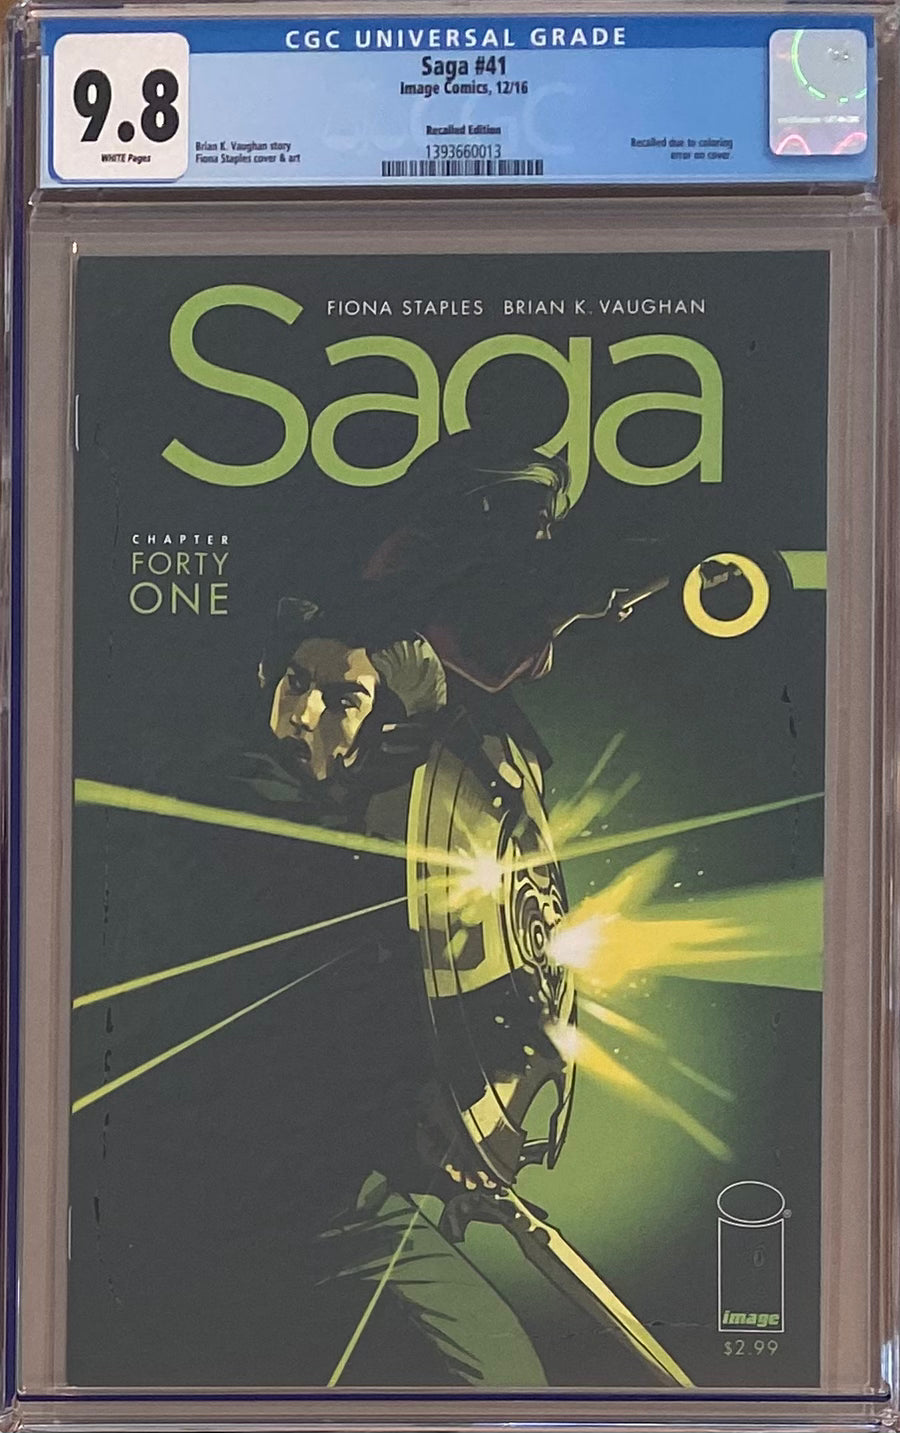 Saga #41 Recalled Edition CGC 9.8